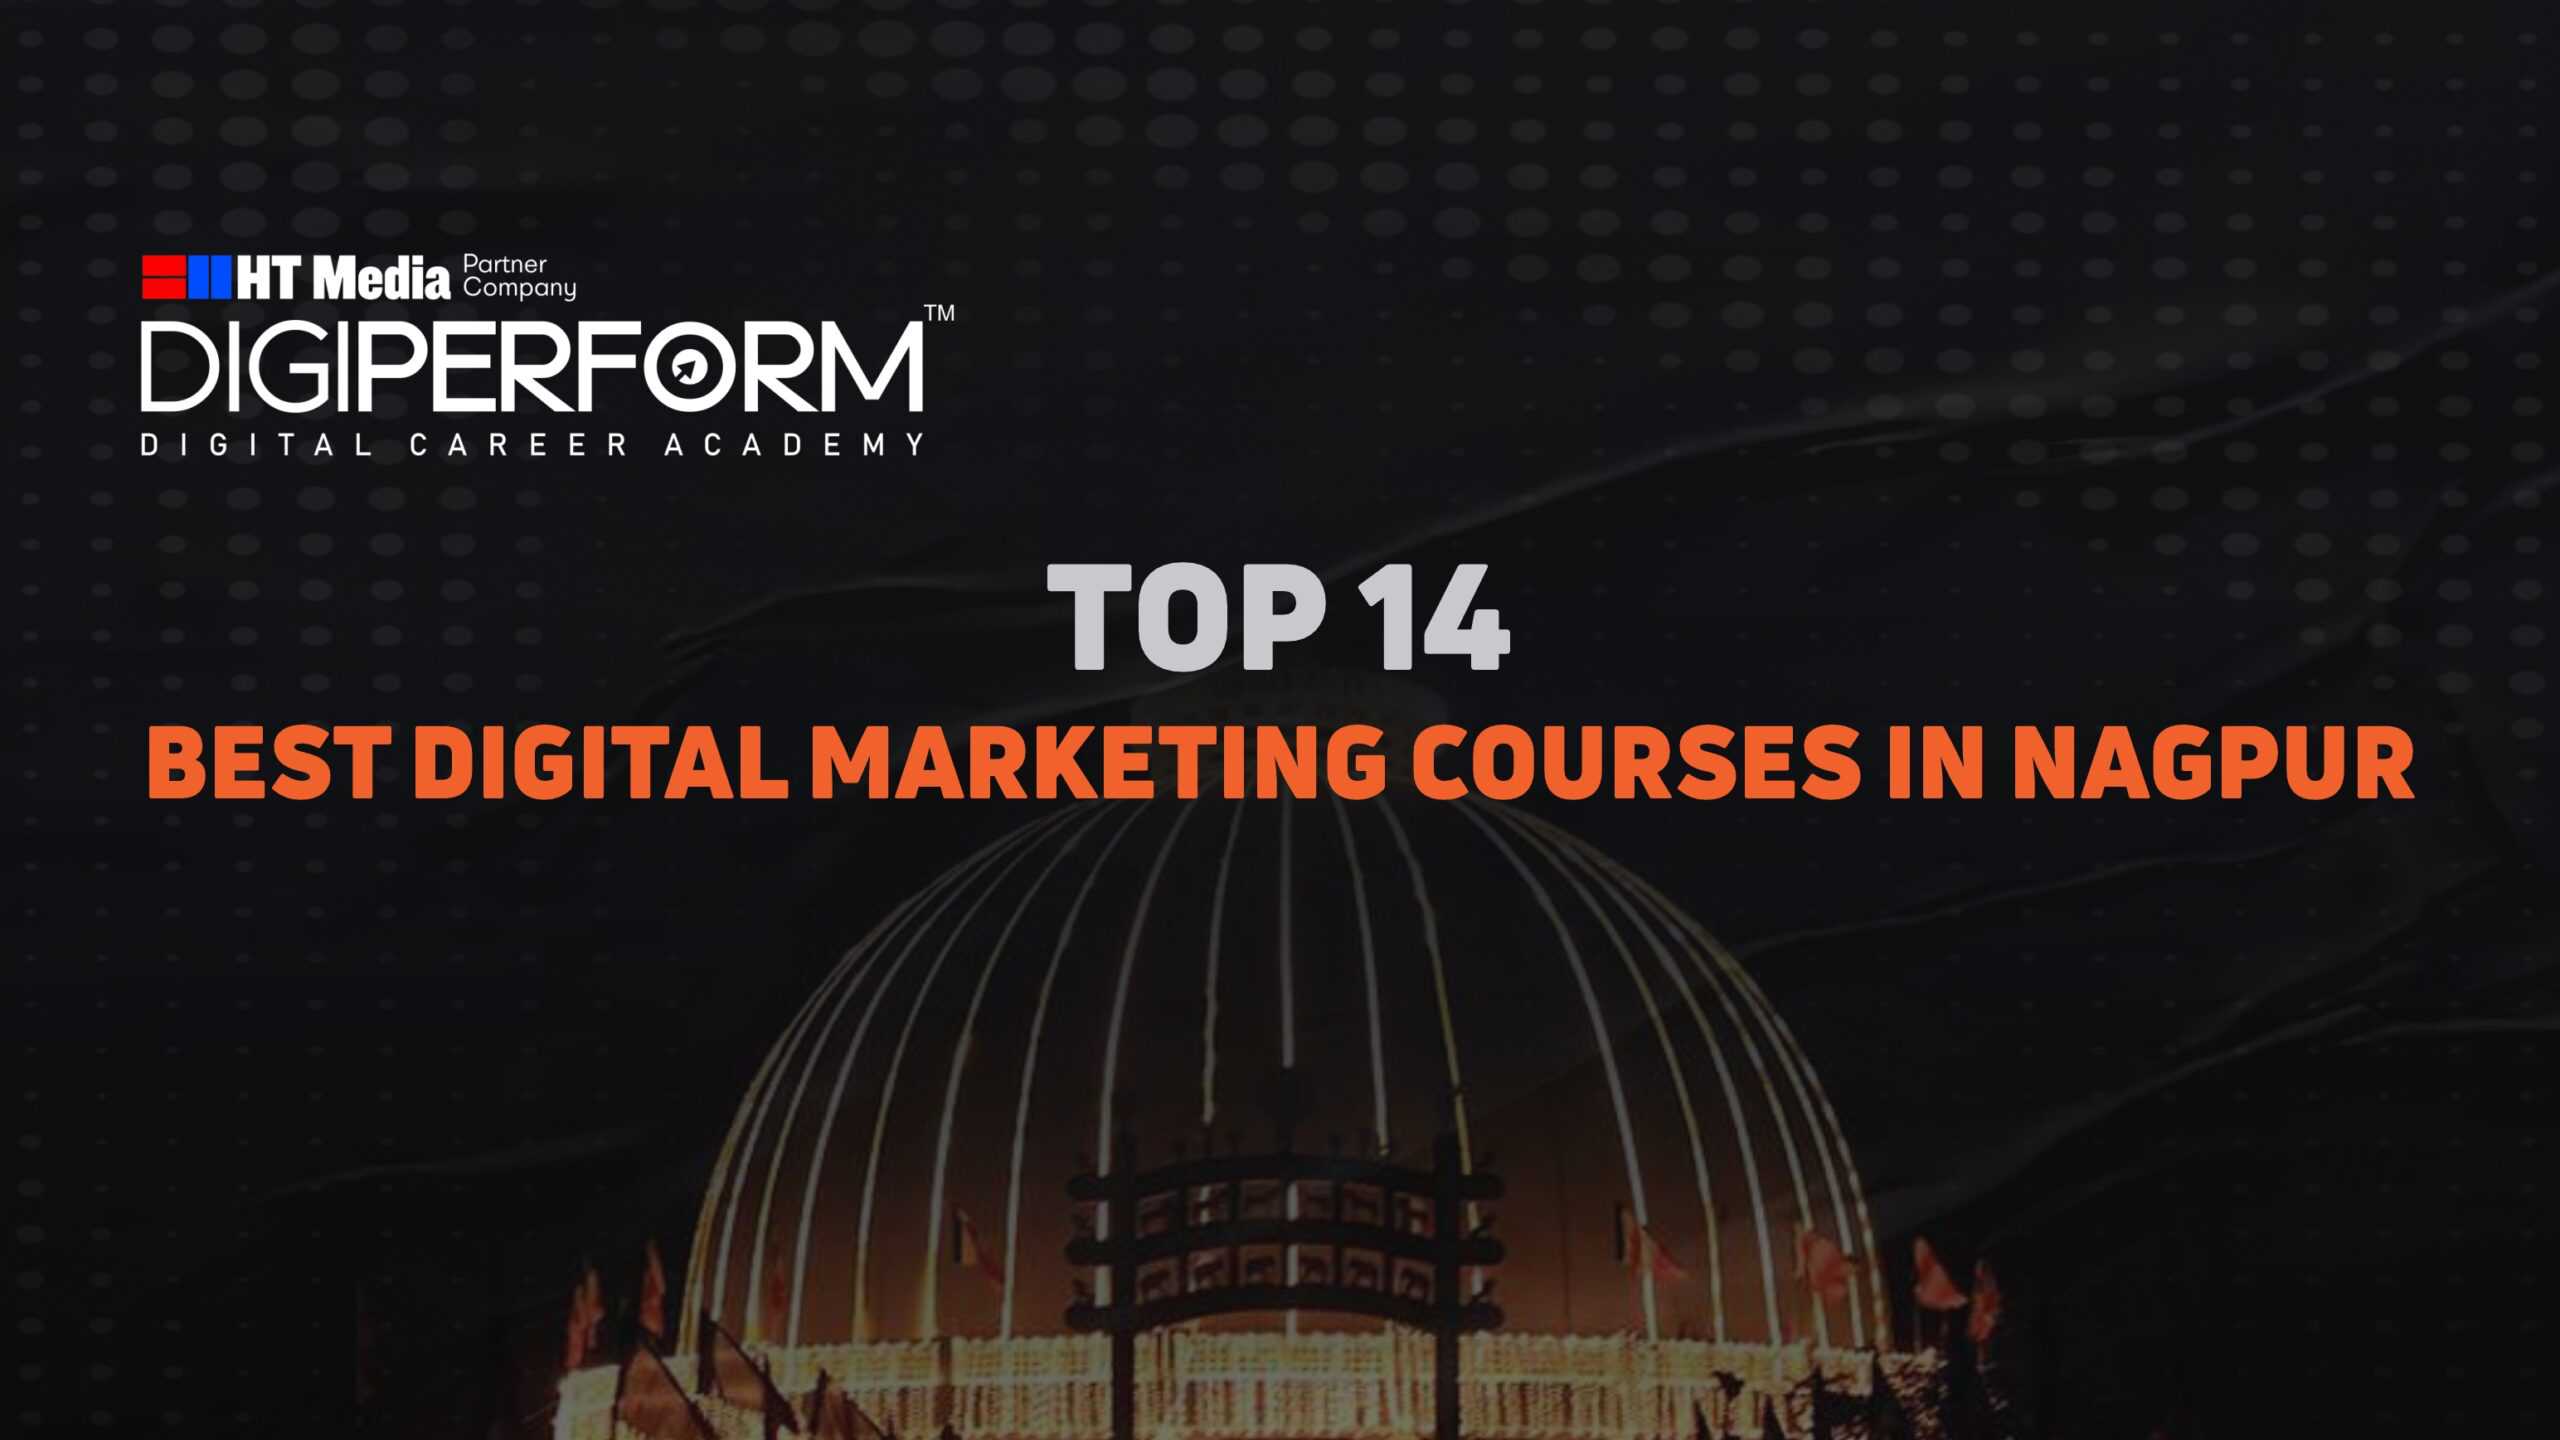 Top 14 Best Digital Marketing Courses in Nagpur